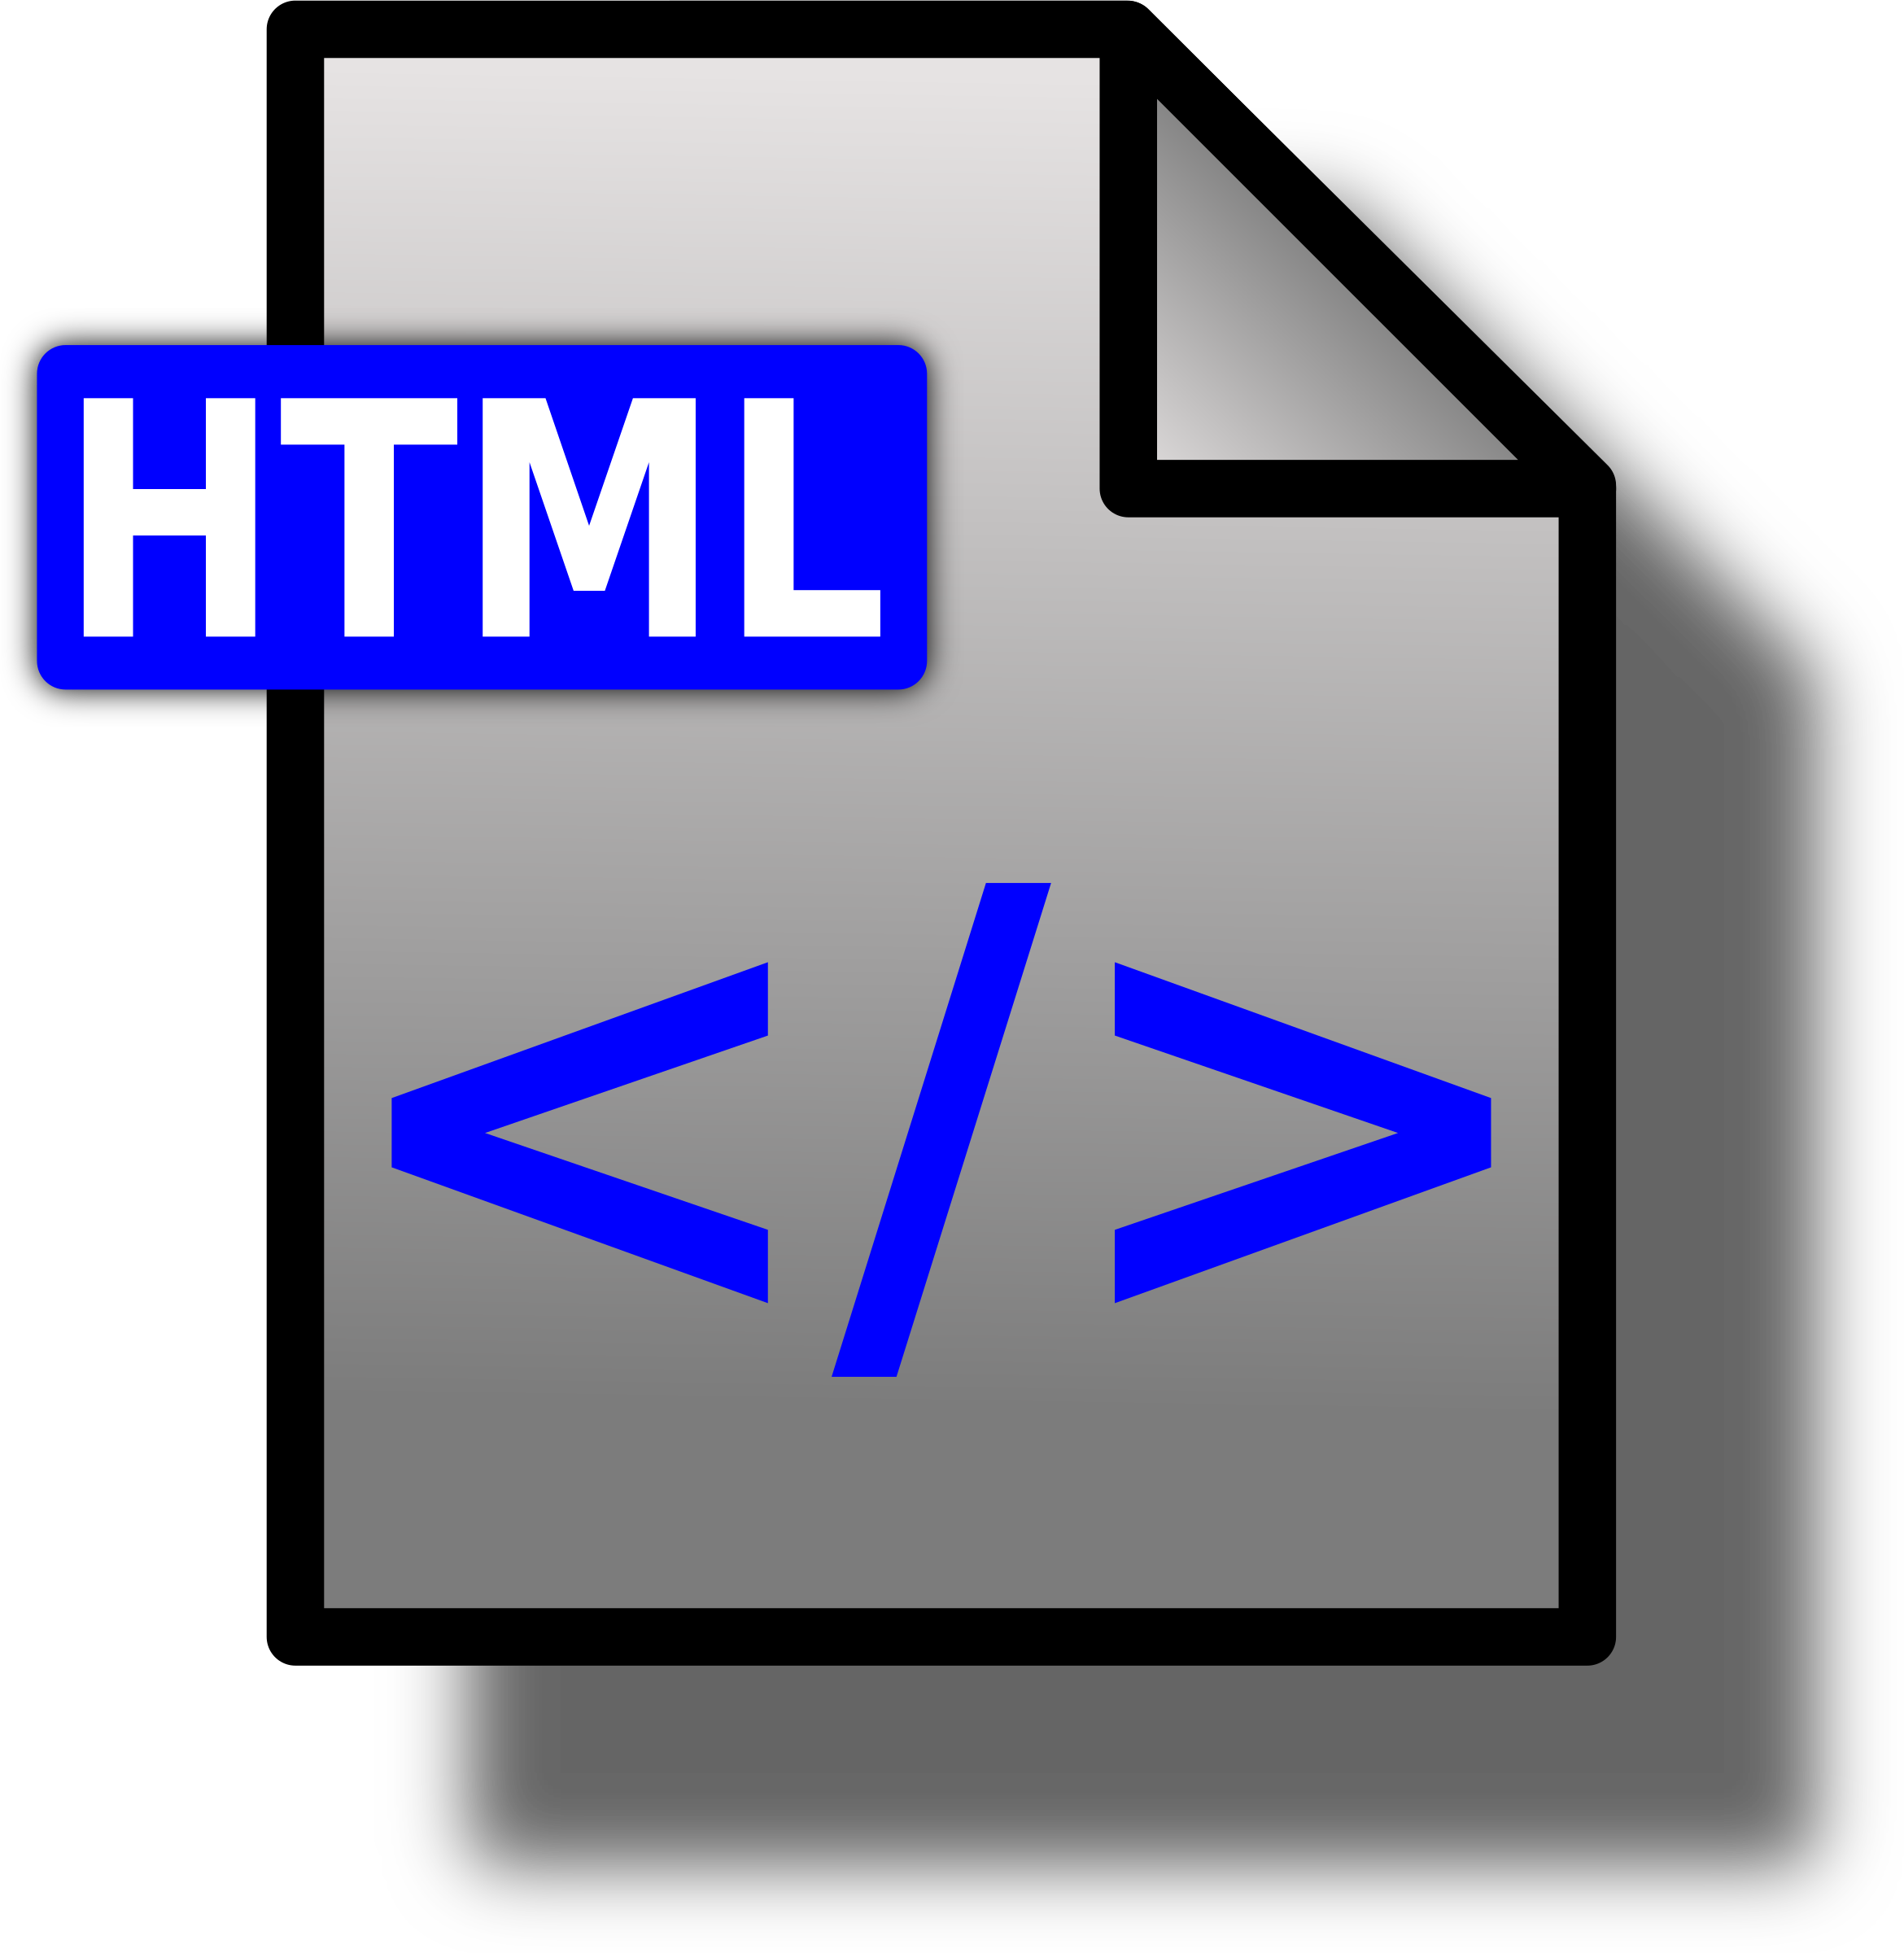 Html new line. Иконка html. Значок html. Иконка файла html. Изображение в html.